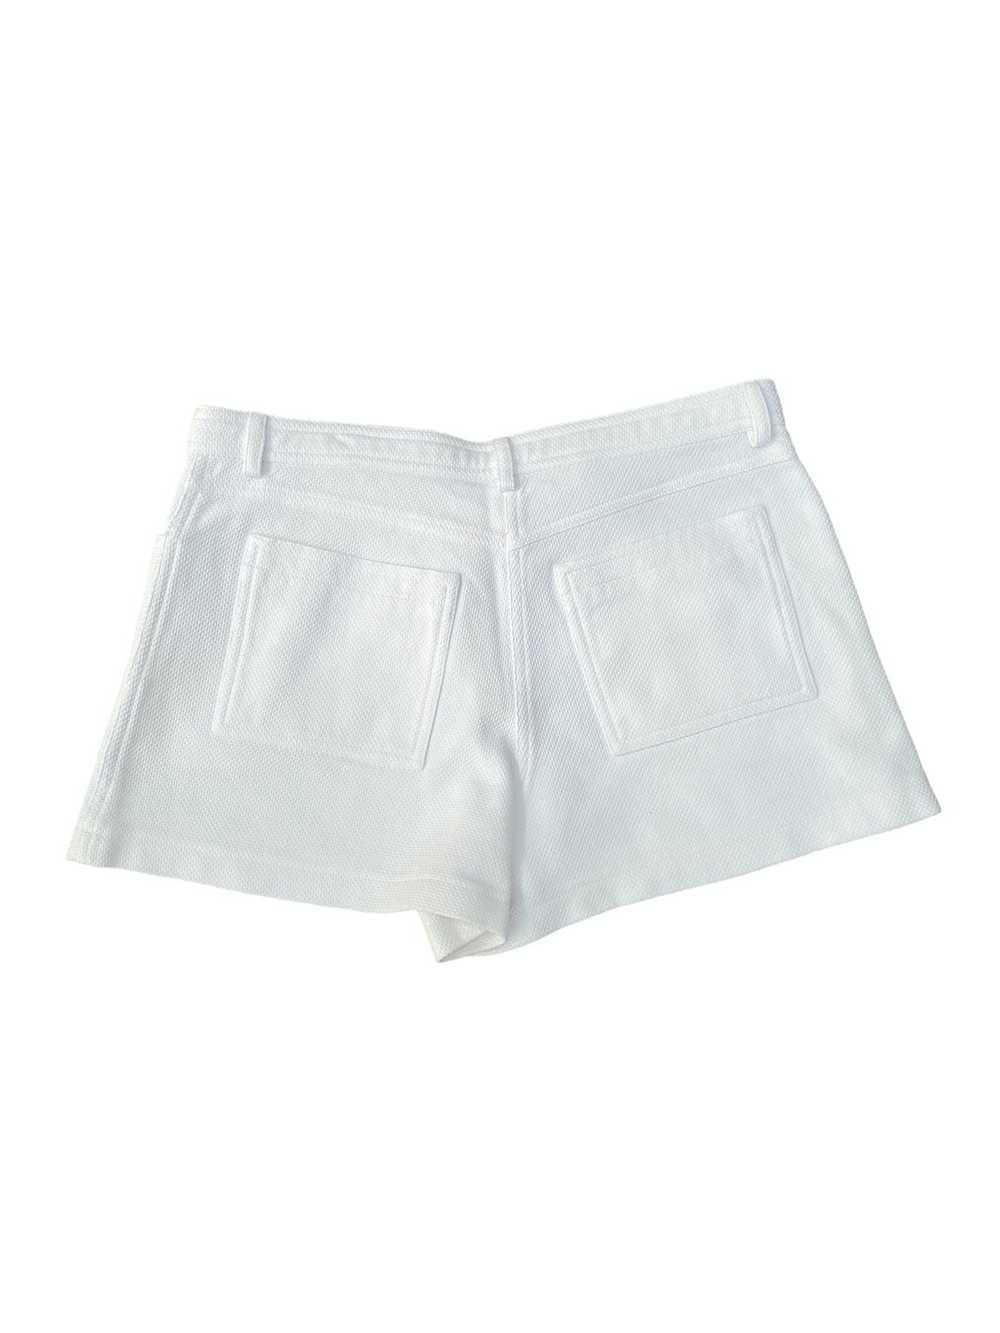 Courreges Vintage Heritage White Cotton Shorts - image 3